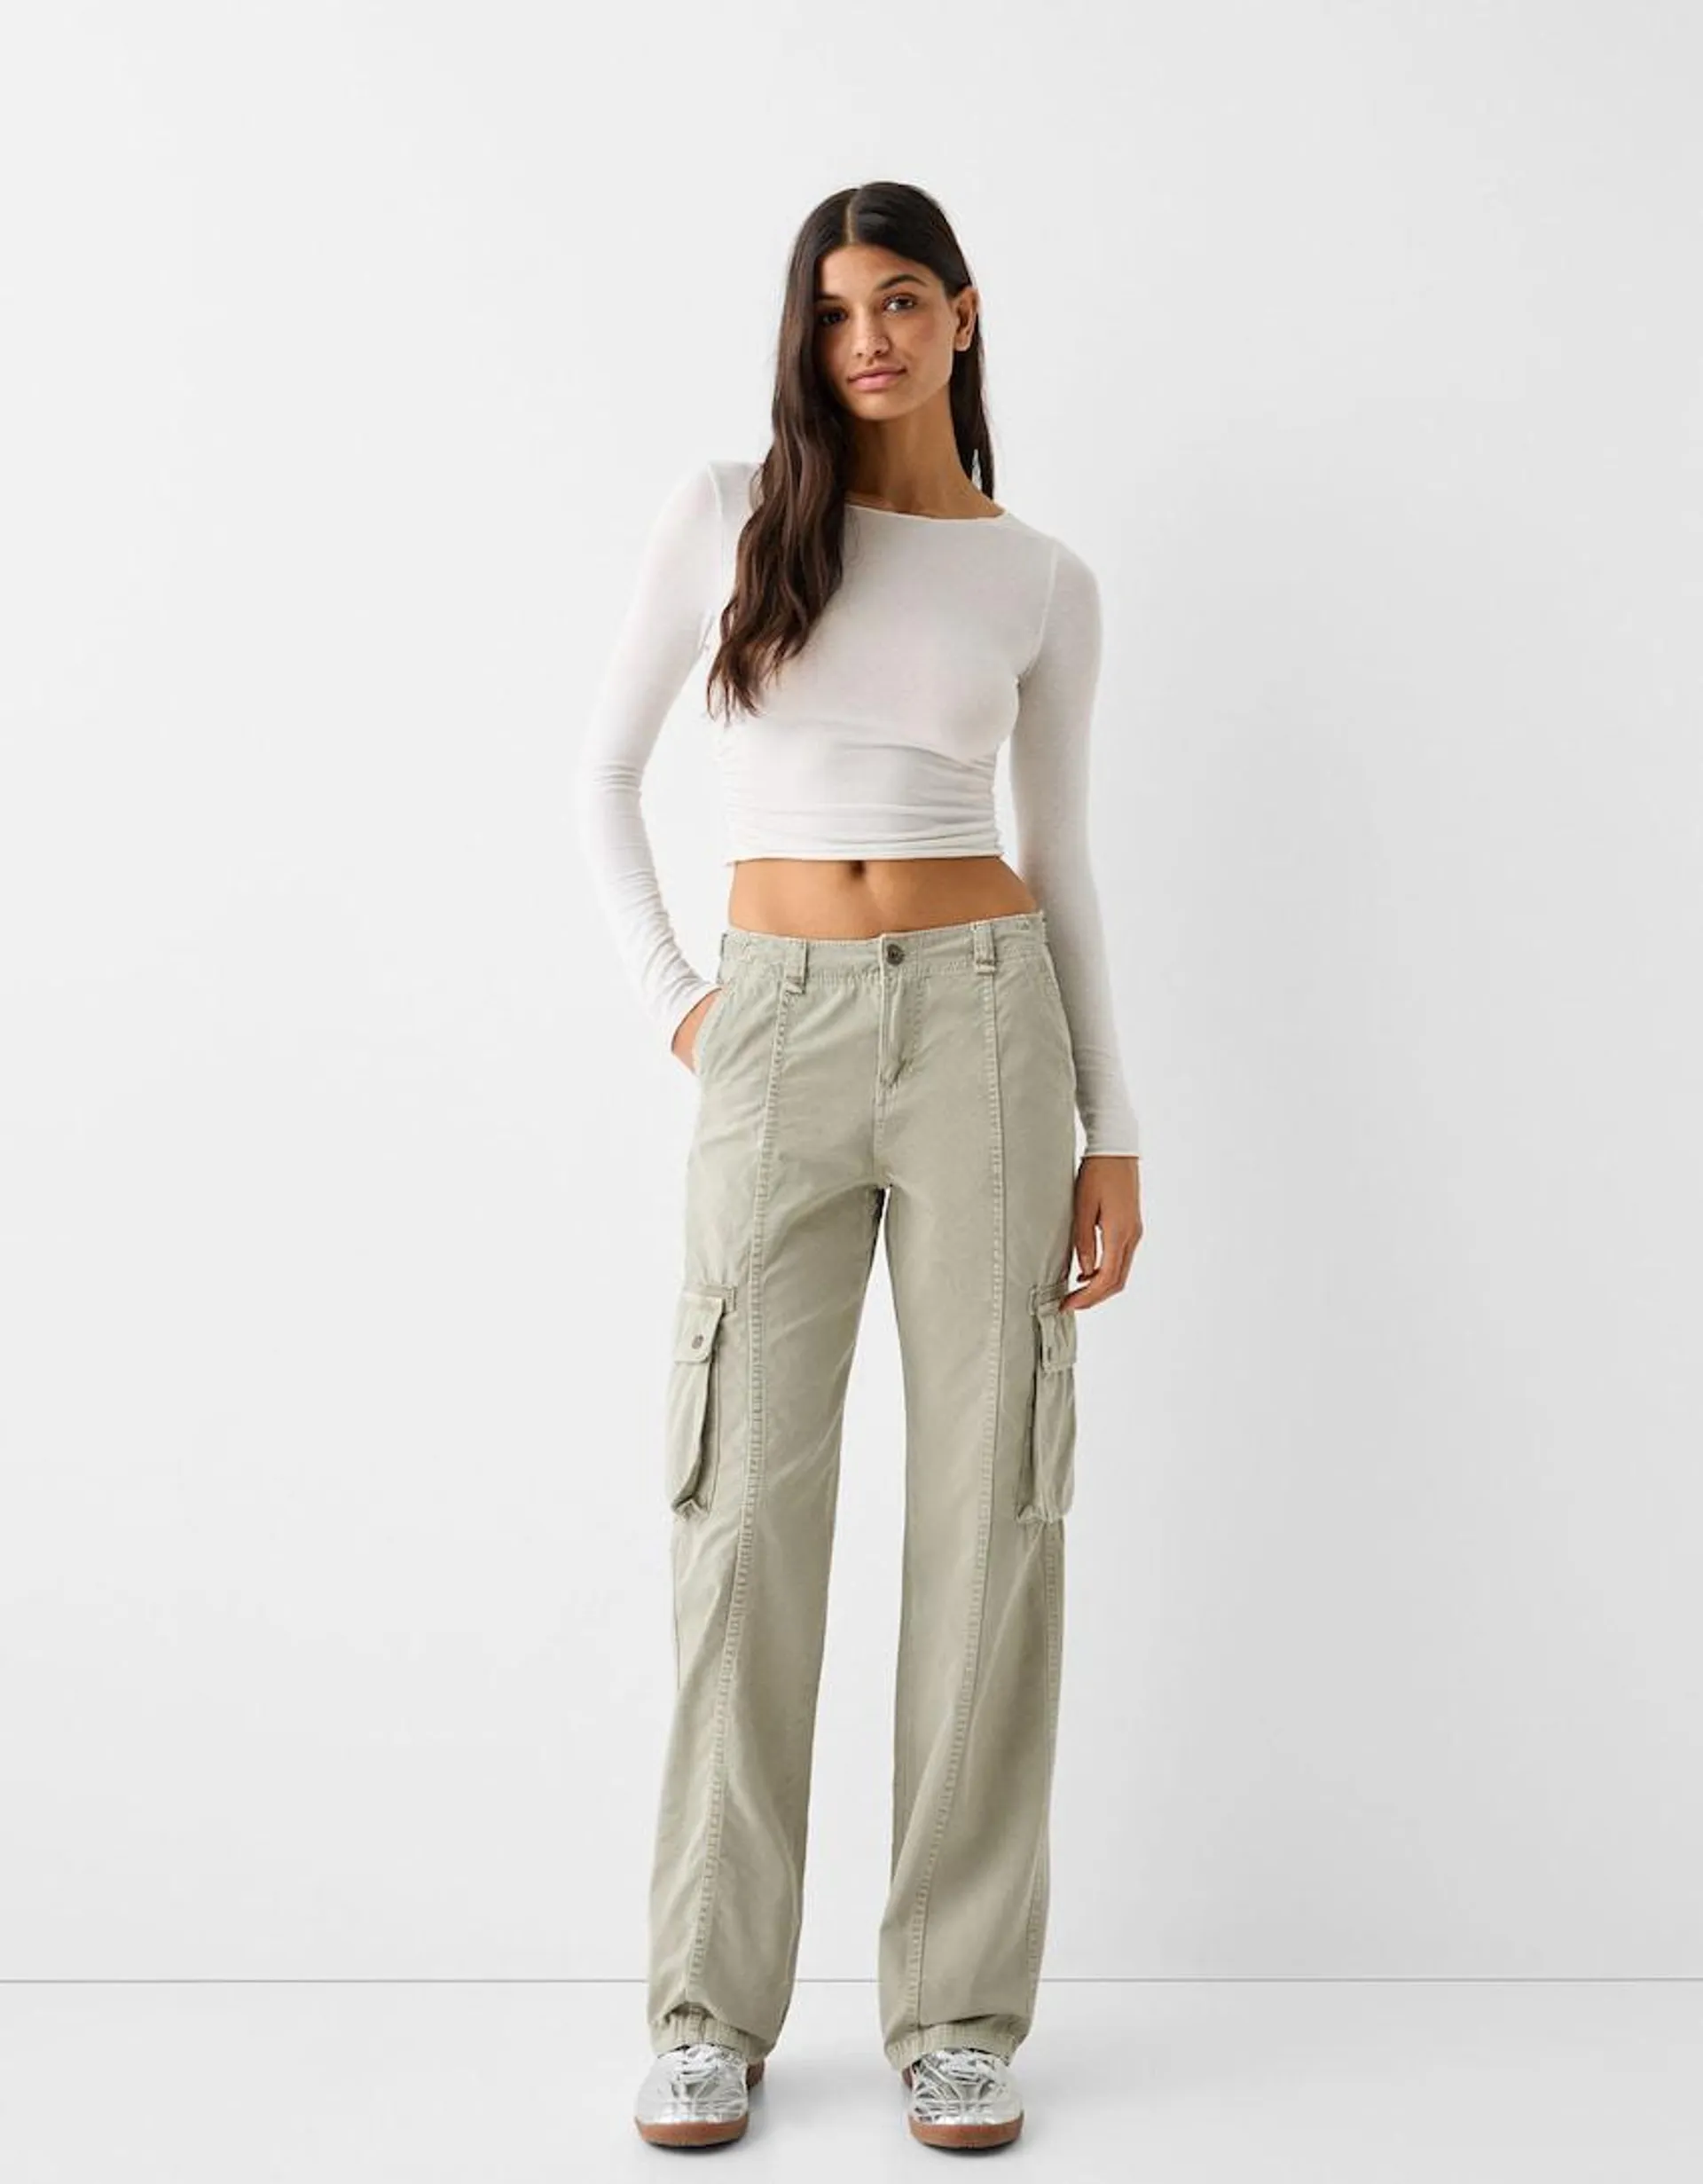 Adjustable straight-leg cotton cargo trousers